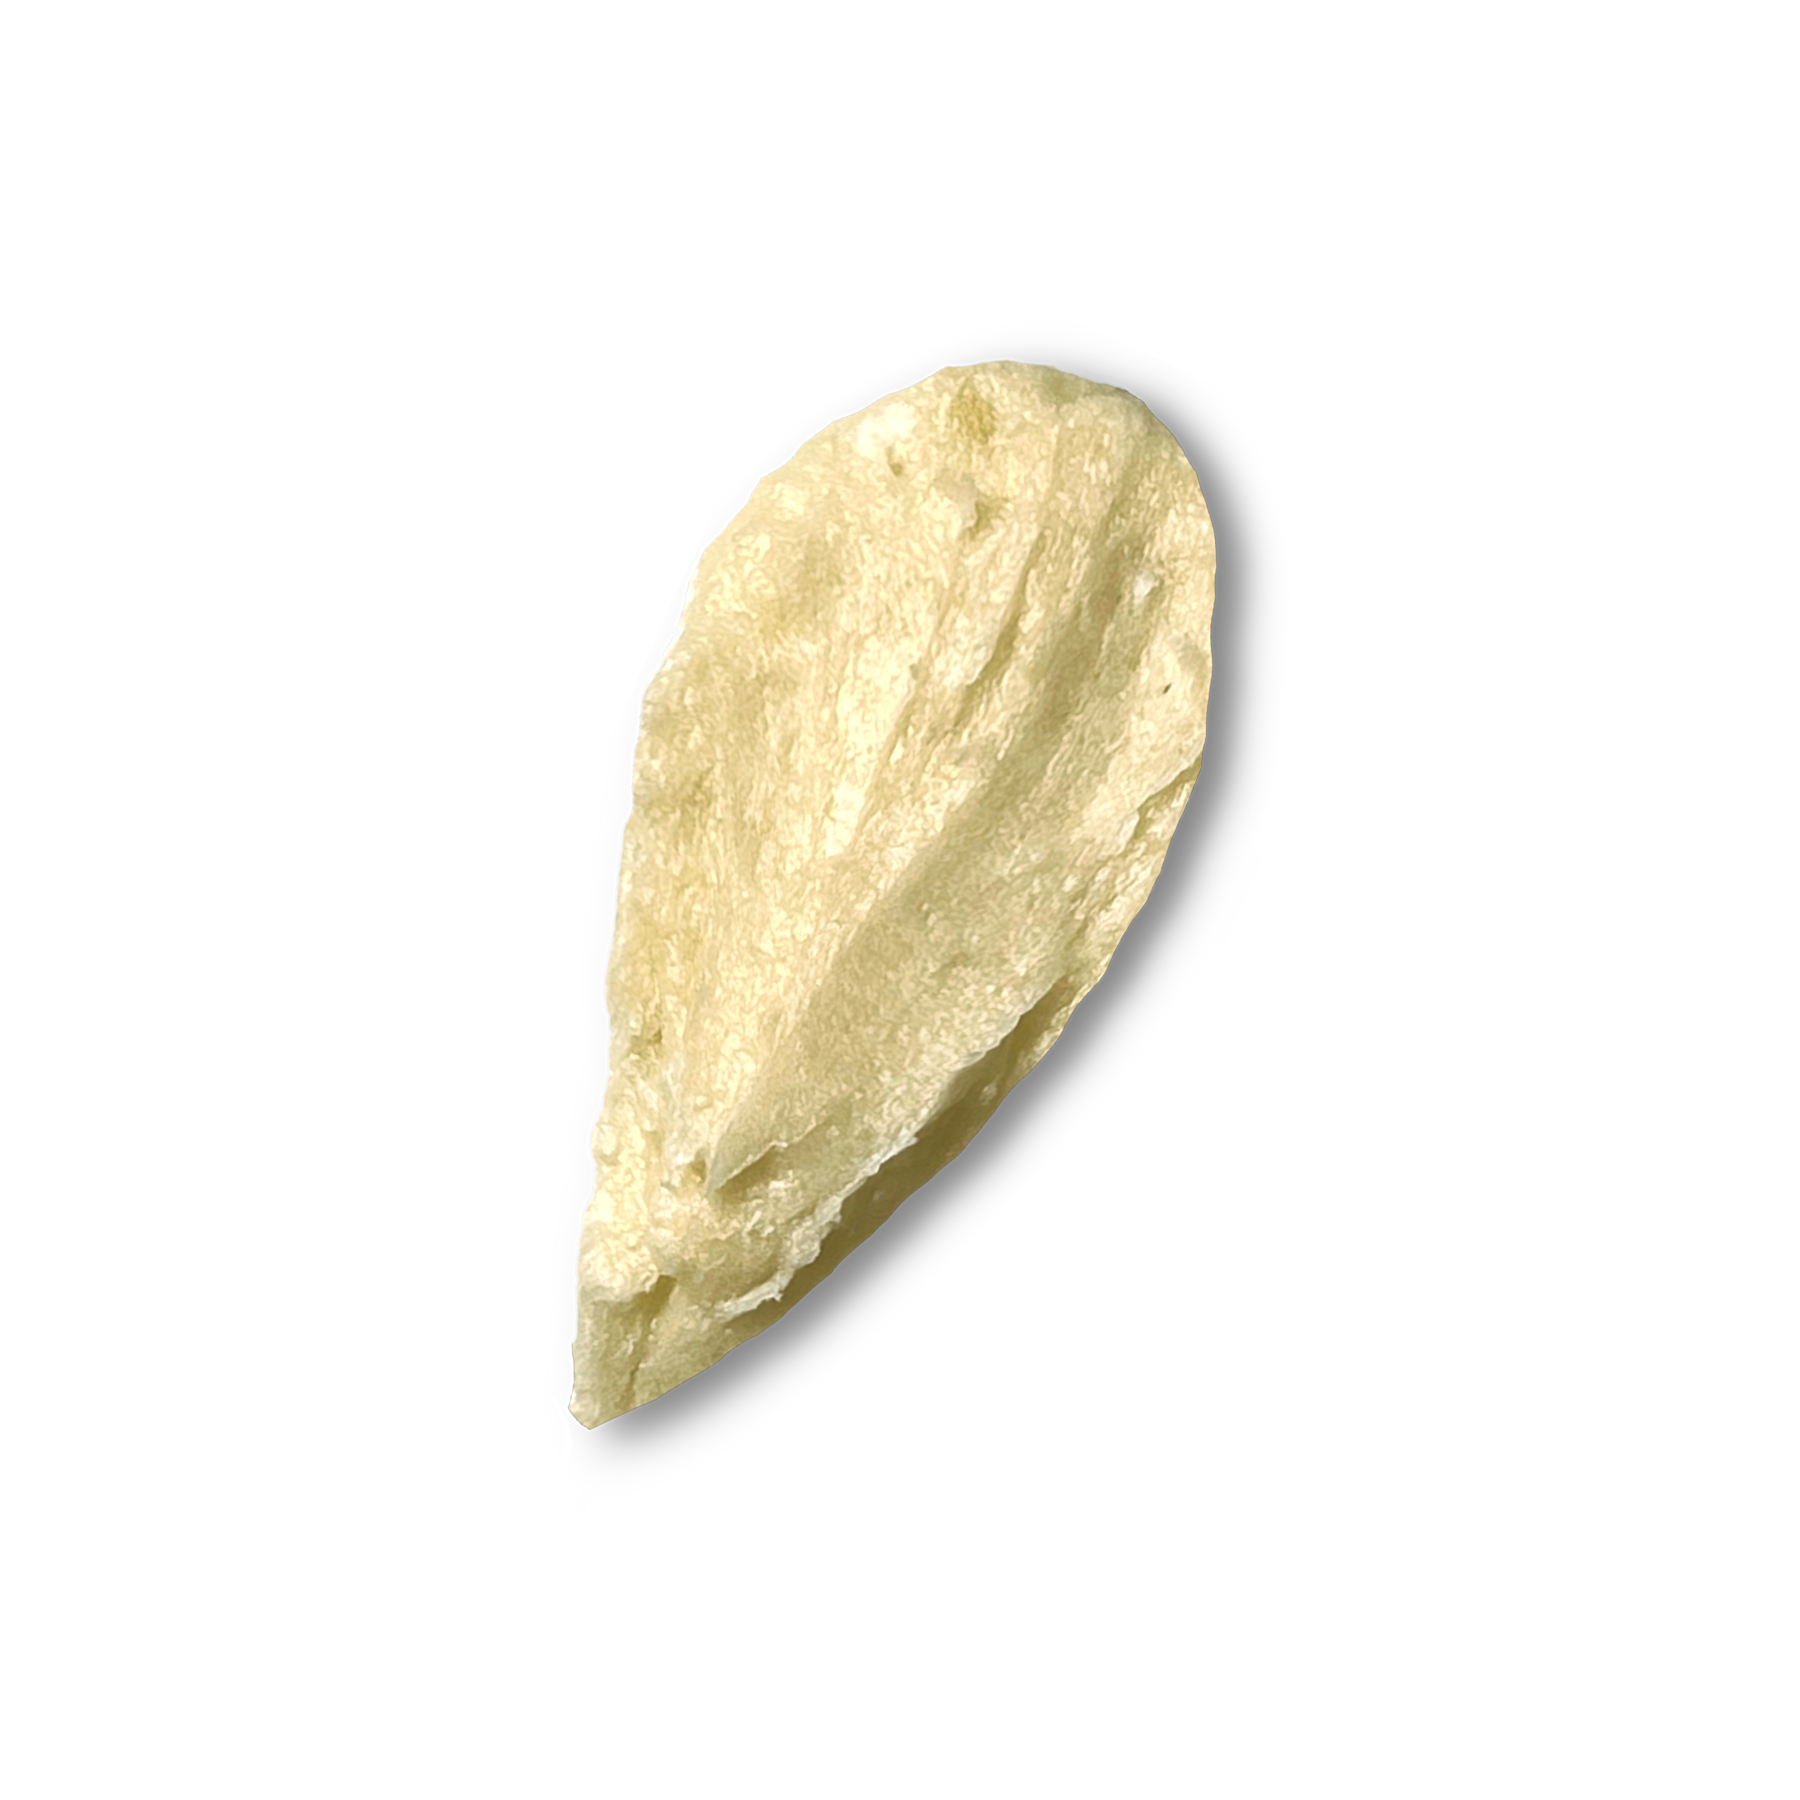 Bloom  Moisturizing Body Butter - ILERA Apothecary 